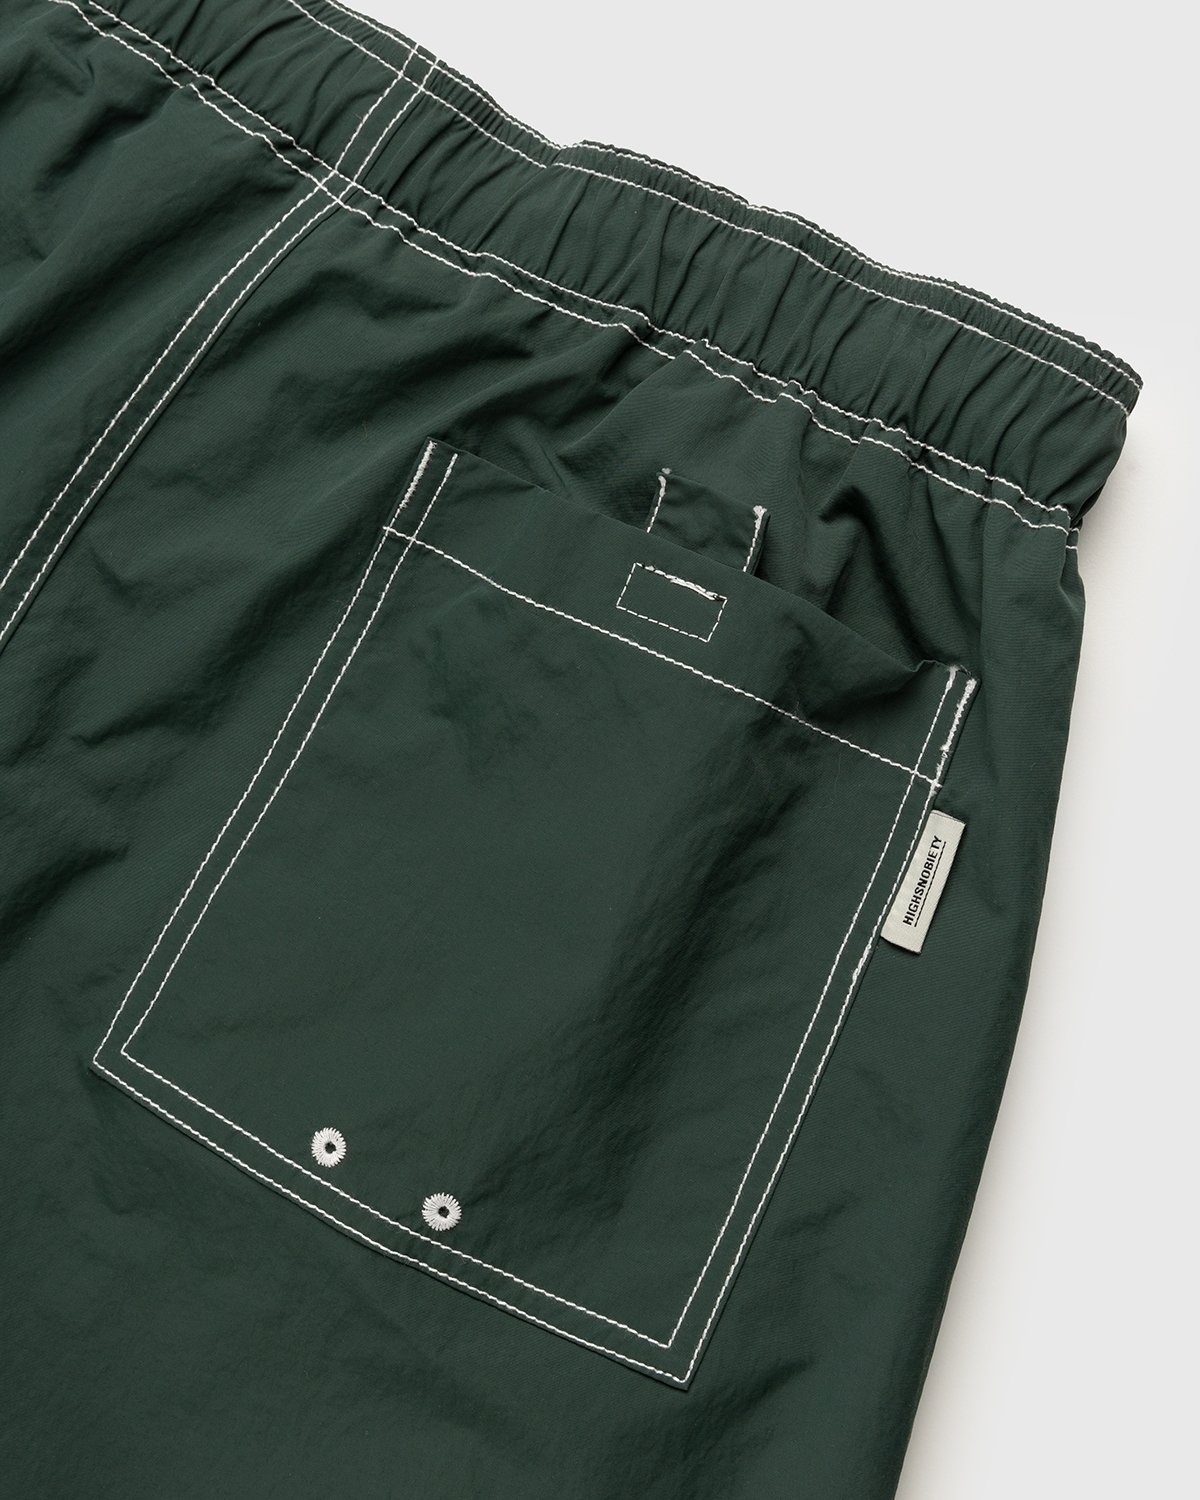 Highsnobiety – Contrast Brushed Nylon Water Shorts Green - Shorts - Green - Image 4